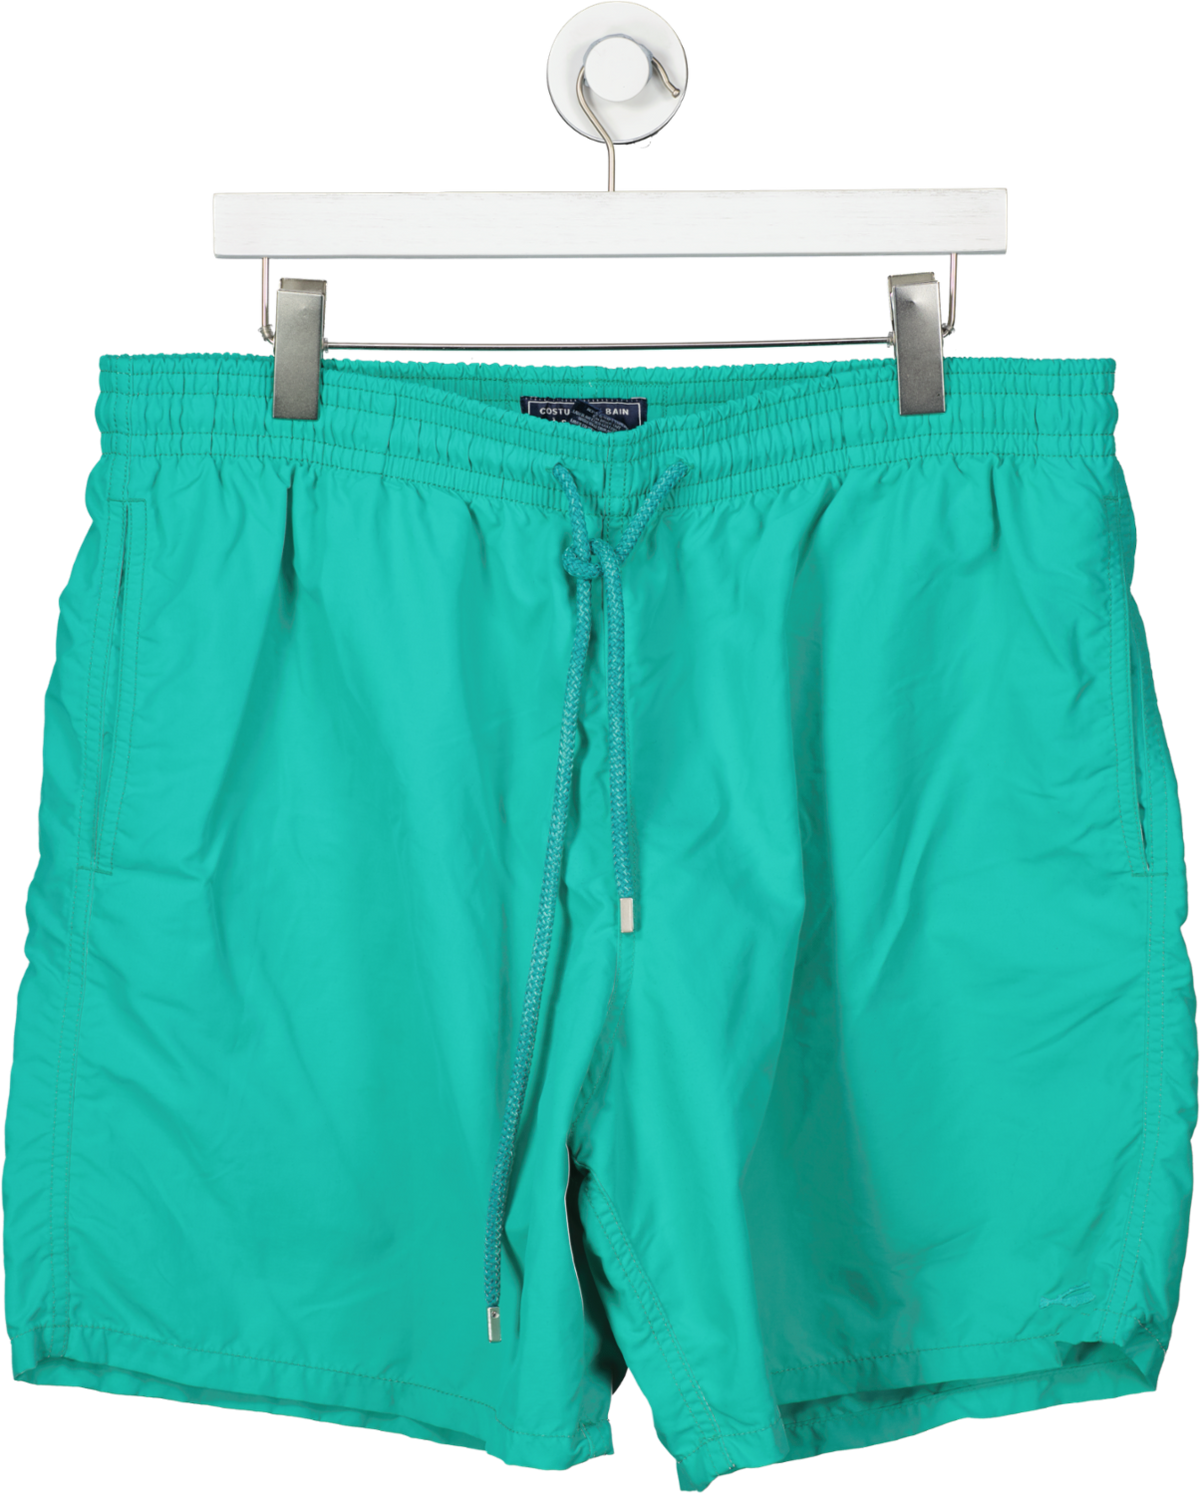 vilebrequin Solid green Swim Shorts With Dustbag UK XXXL